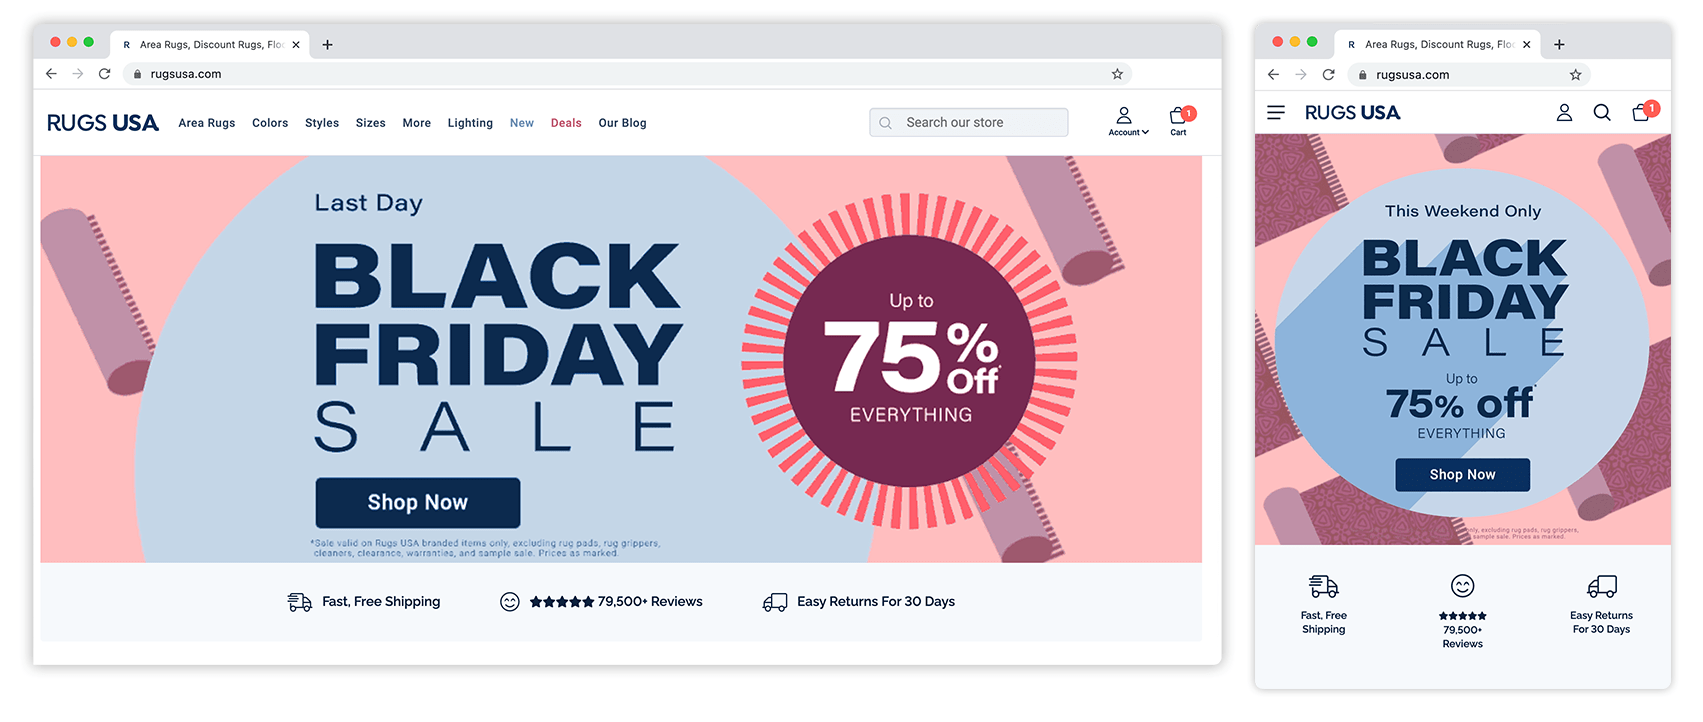 Black Friday Sale Homepage banner